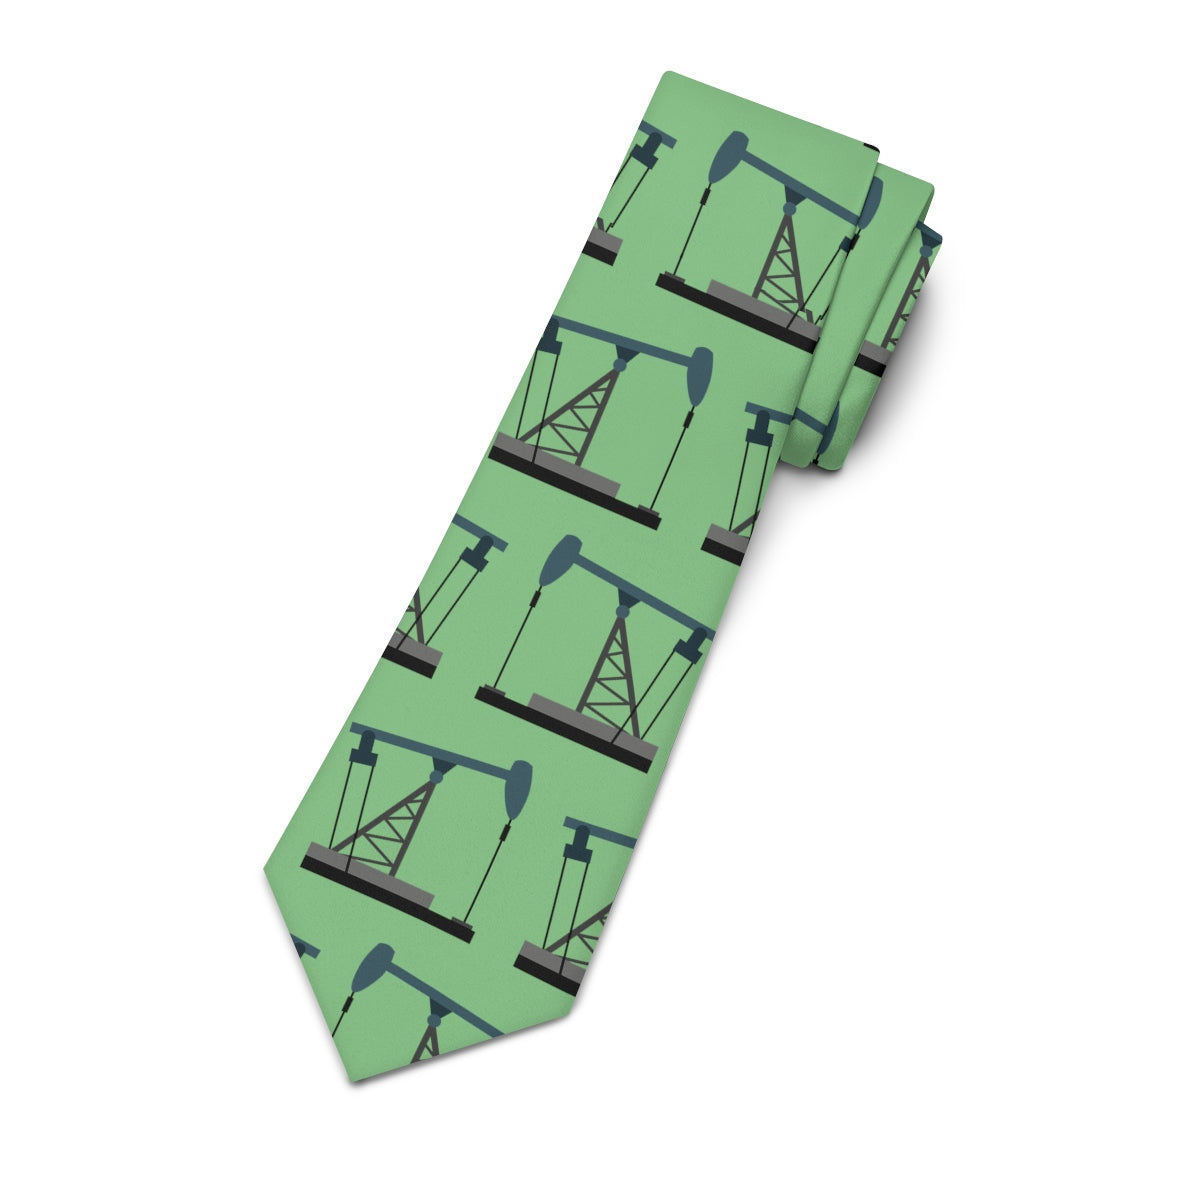 Pumpjack Necktie (Green)